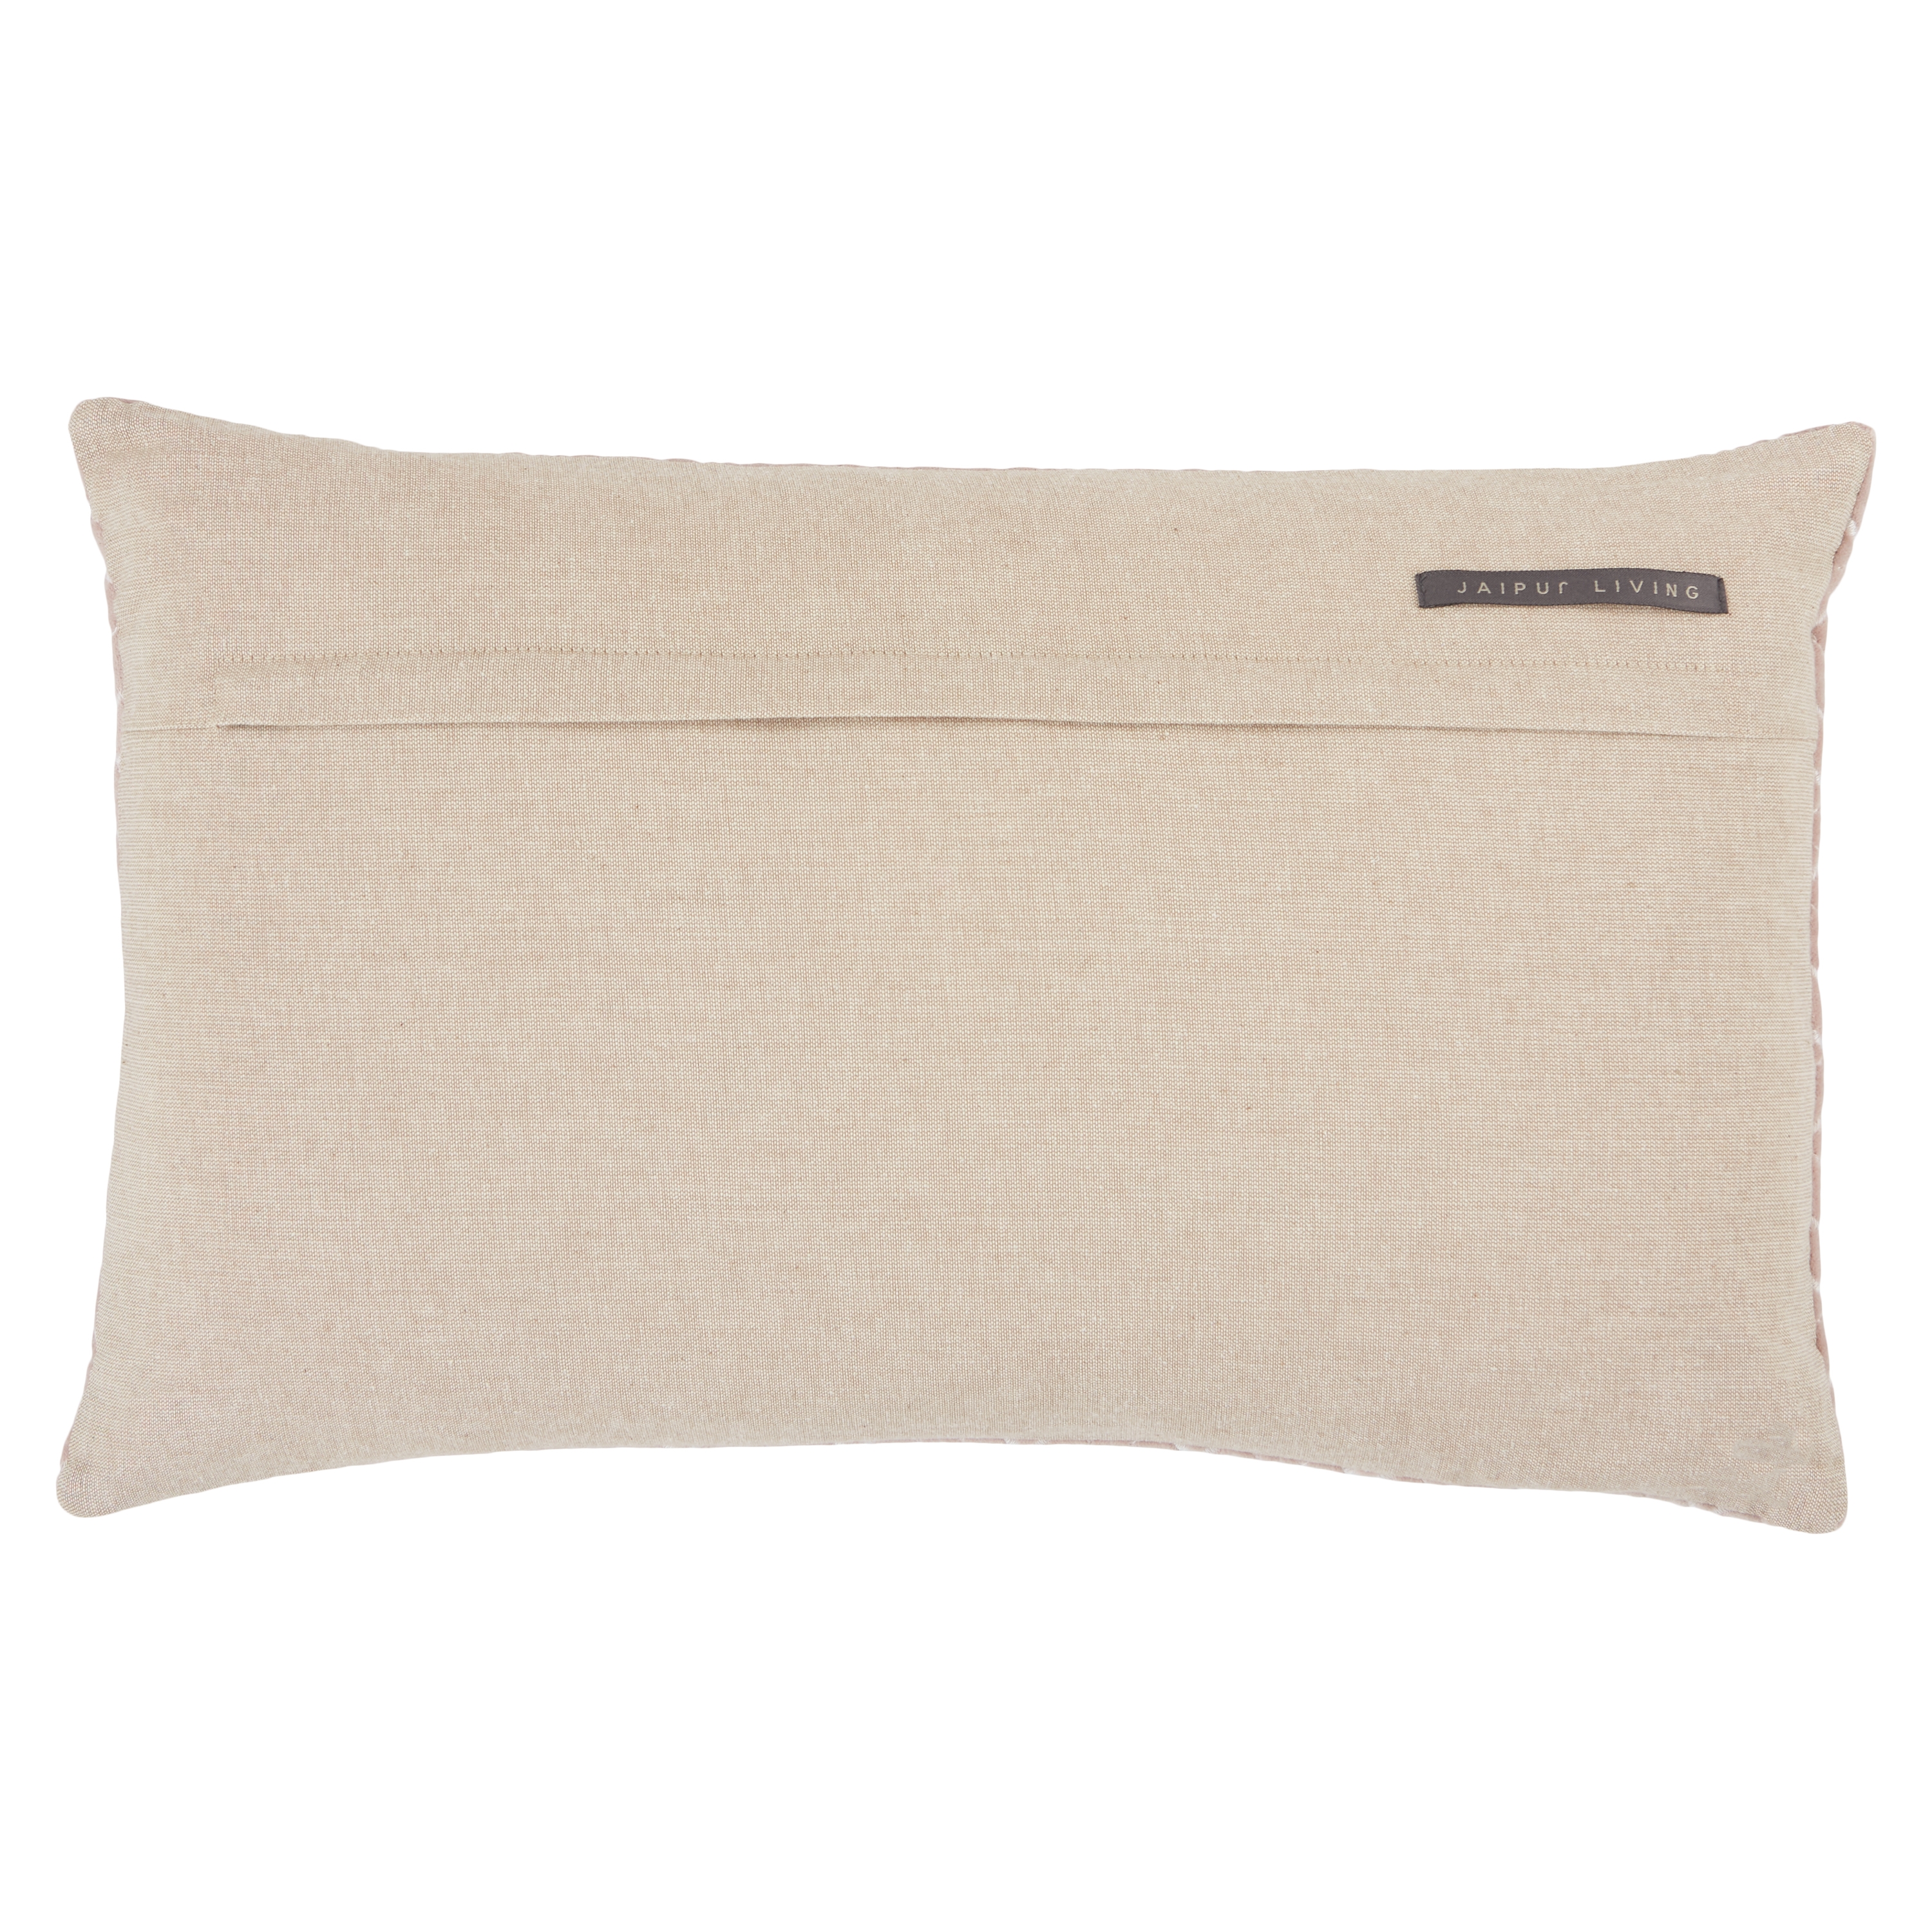 Design (US) Blush 13"X21" Pillow - Image 1